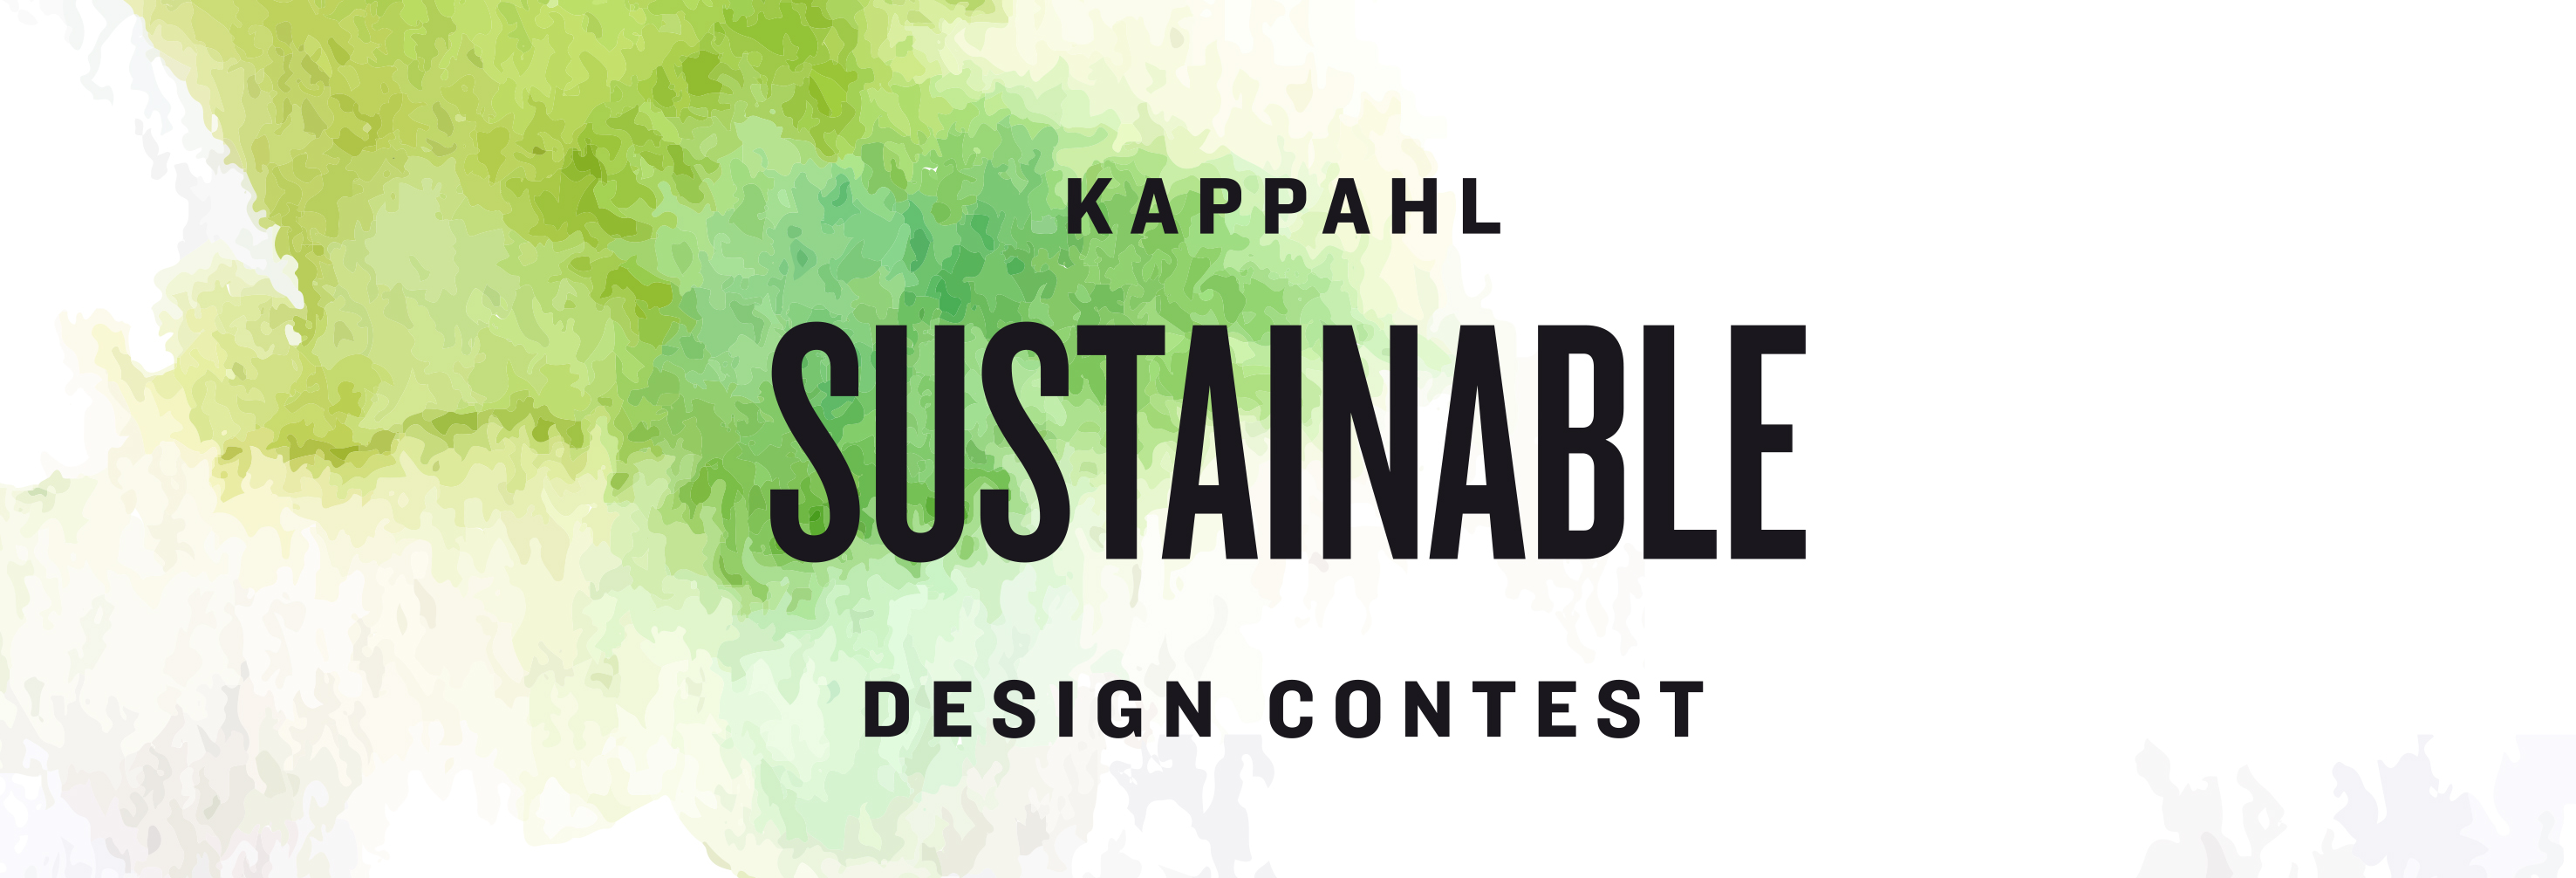 KappAhl: Hållbart mode i ny tävling för unga designers